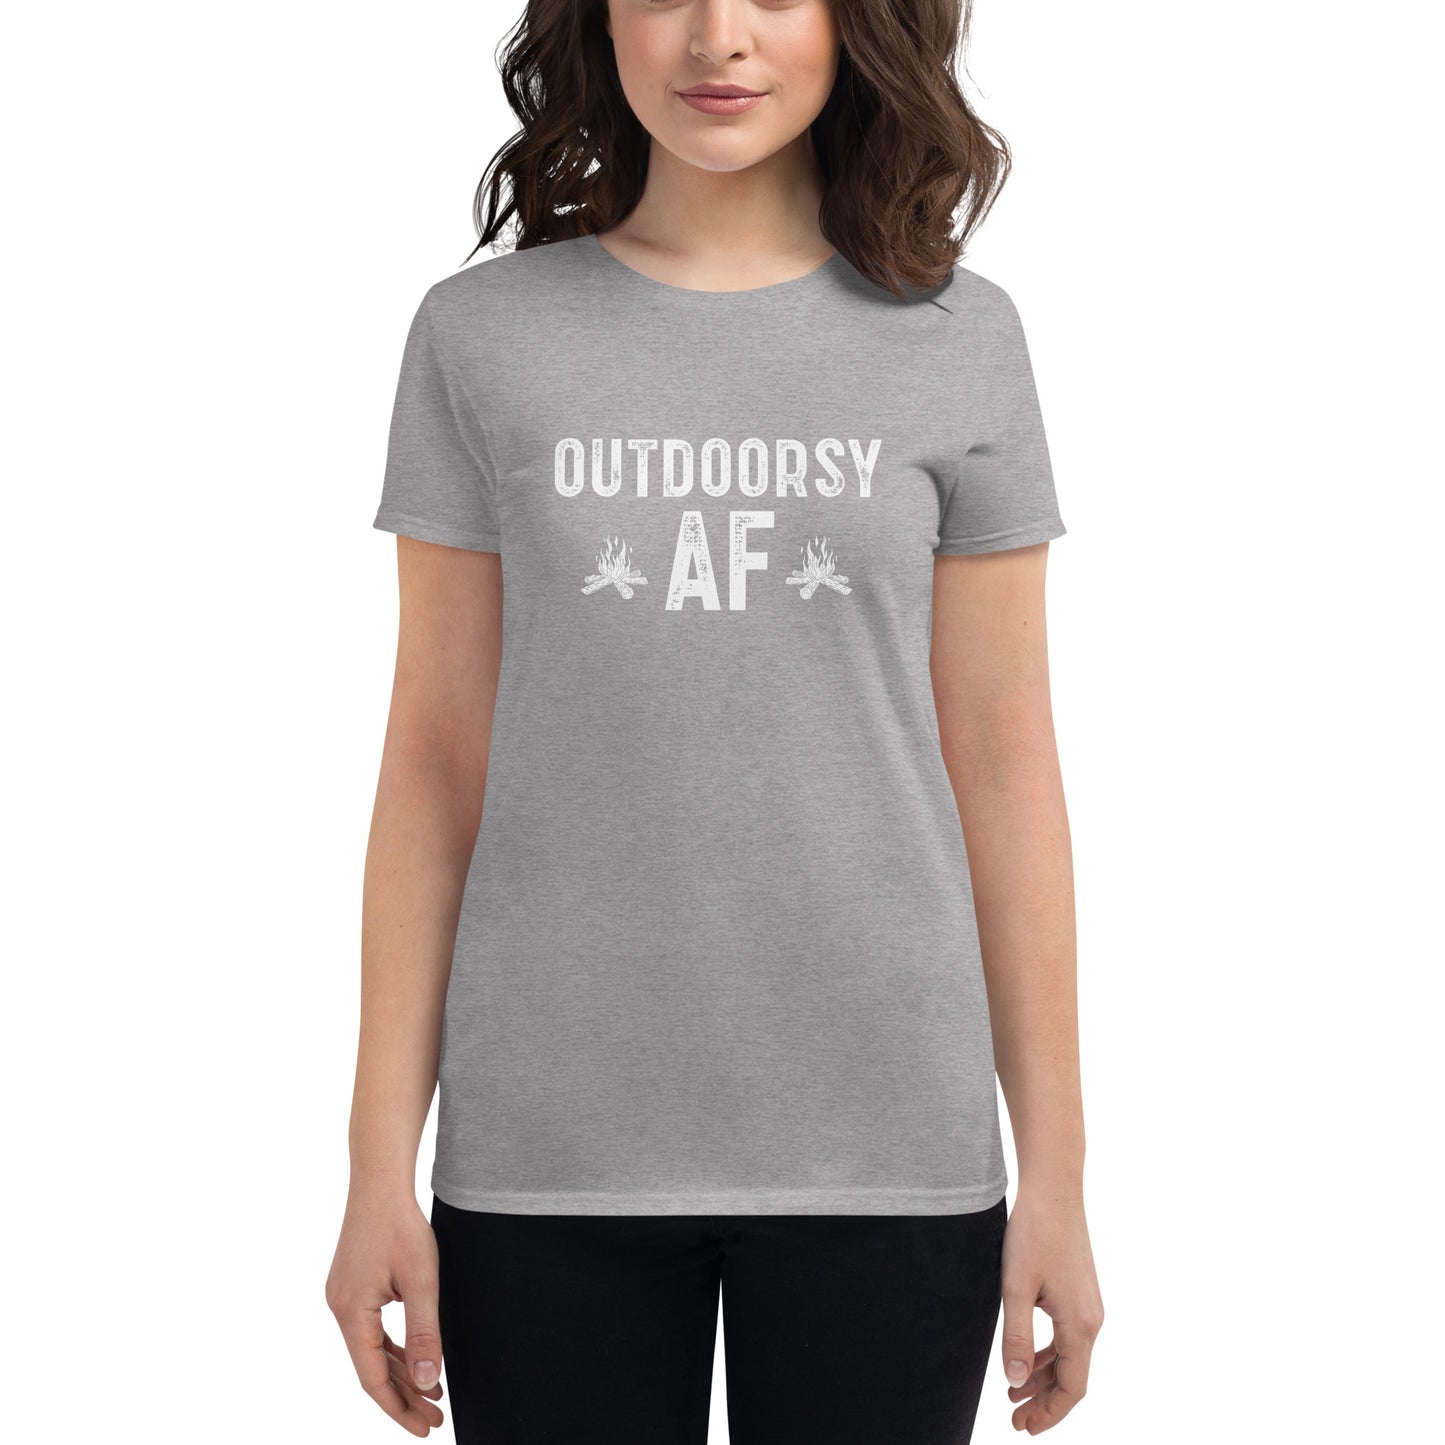 Women's Fashion Fit T-shirt - Outdoorsy AF New Design